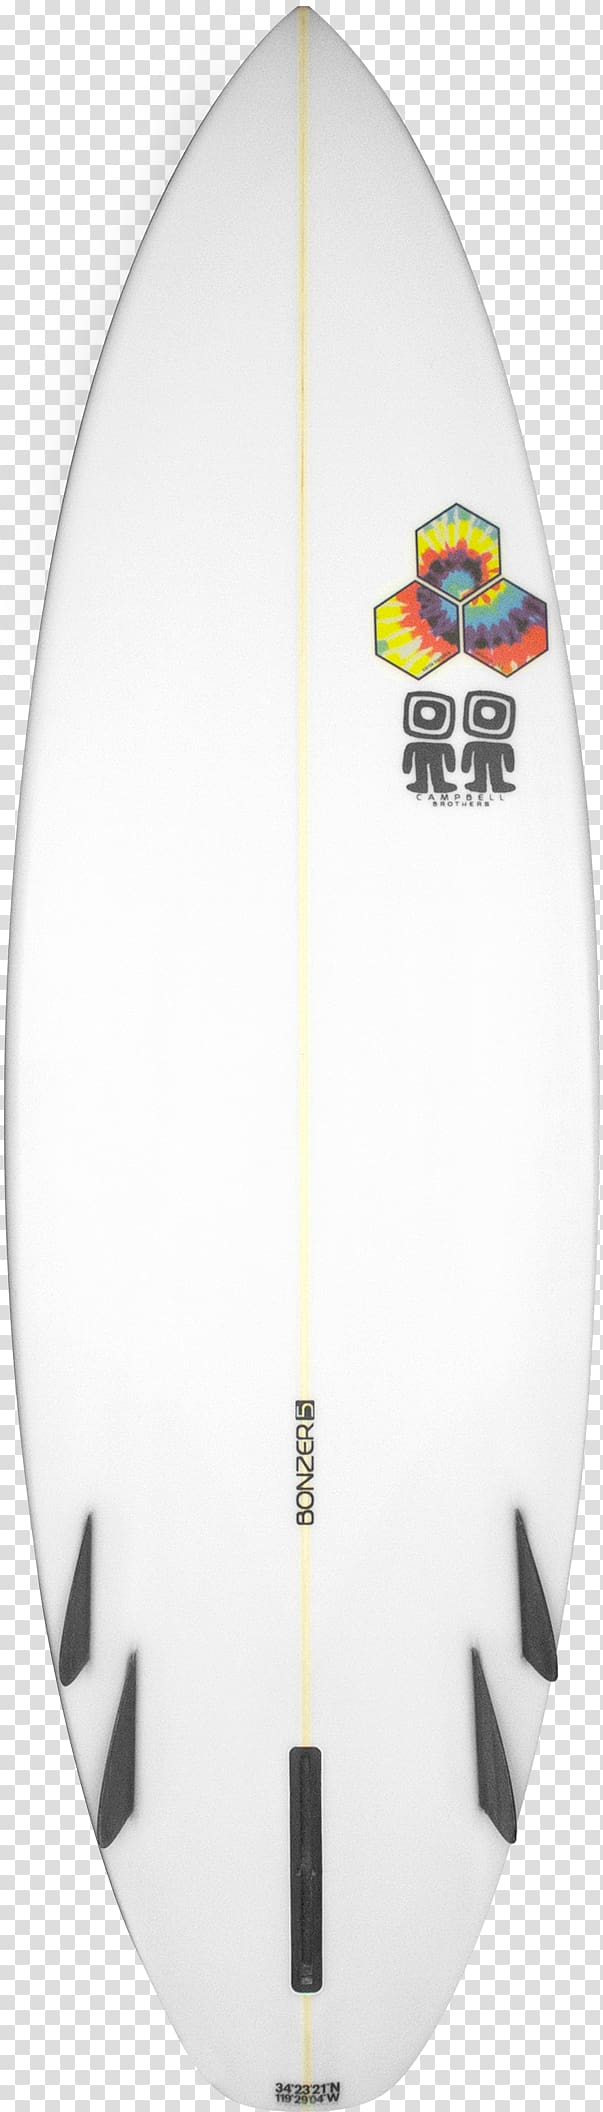 Surfboard Bonzer Surfing Shop Kujūkuri Beach, surfing transparent background PNG clipart